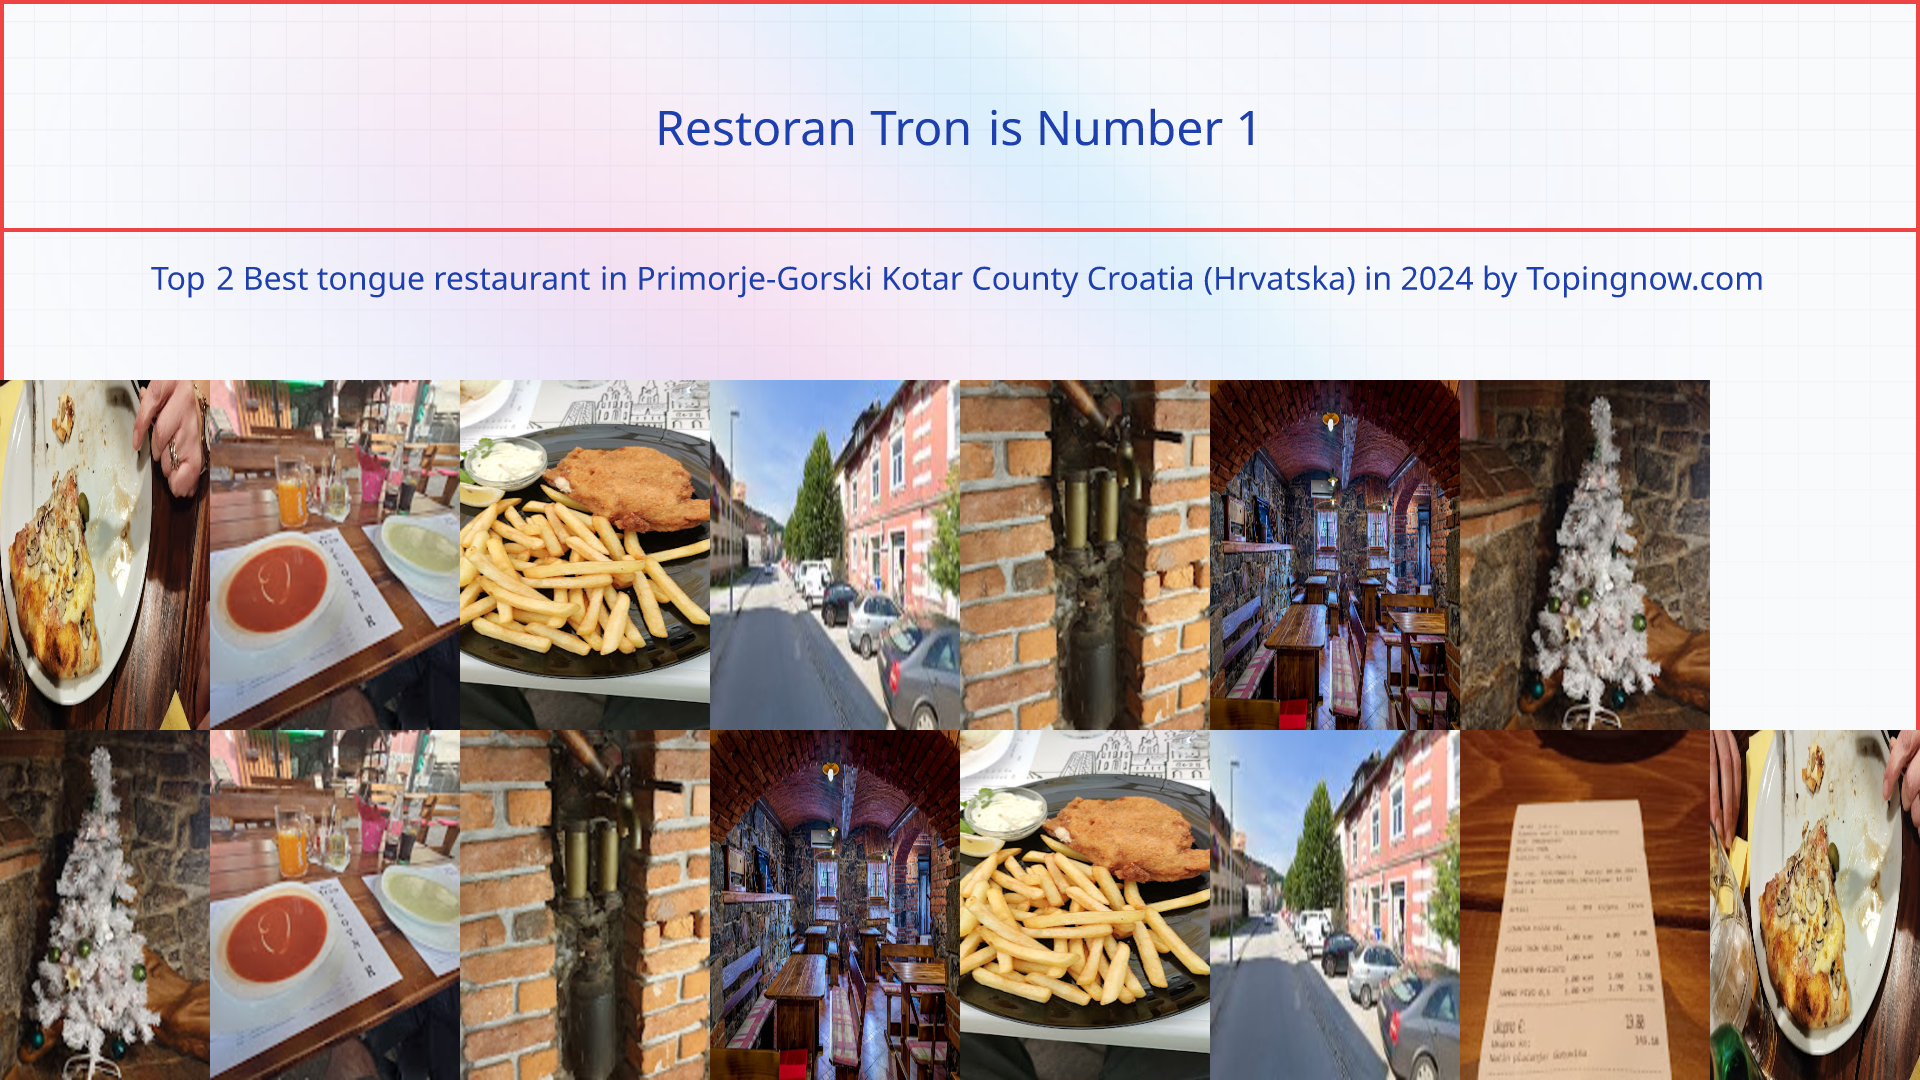 Restoran Tron: Top 2 Best tongue restaurant in Primorje-Gorski Kotar County Croatia (Hrvatska) in 2024